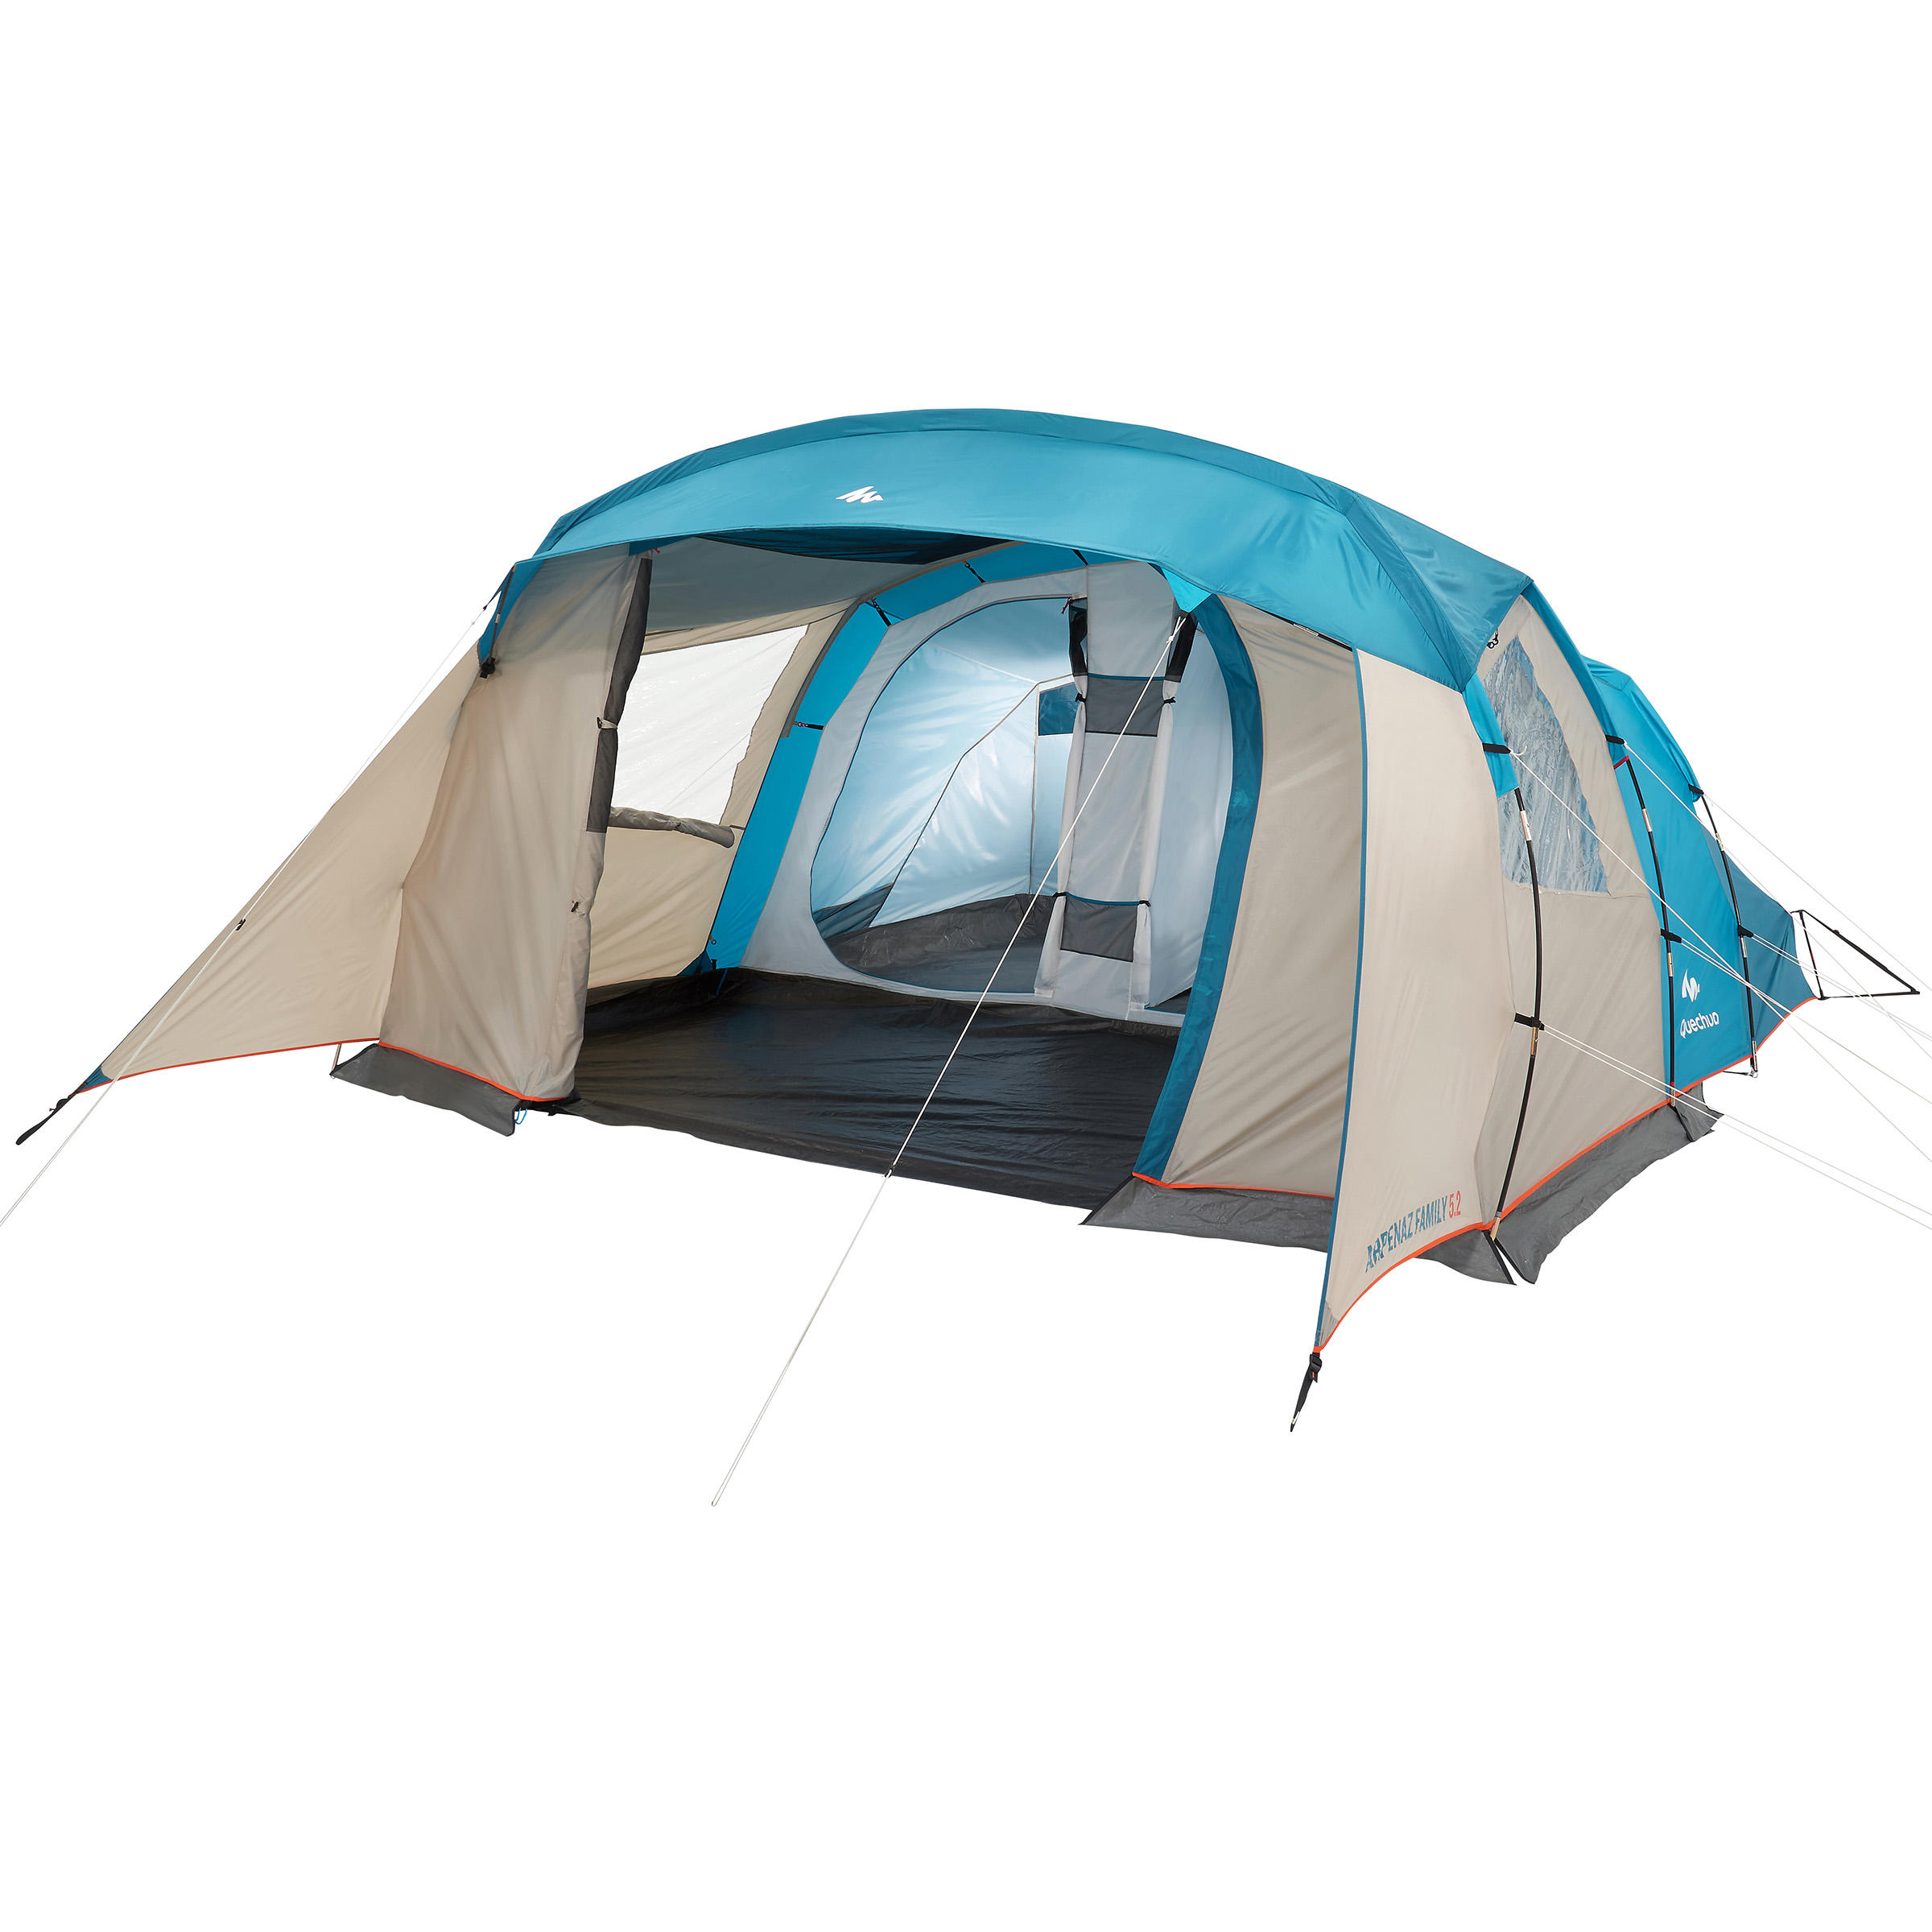 decathlon 5.2 tent